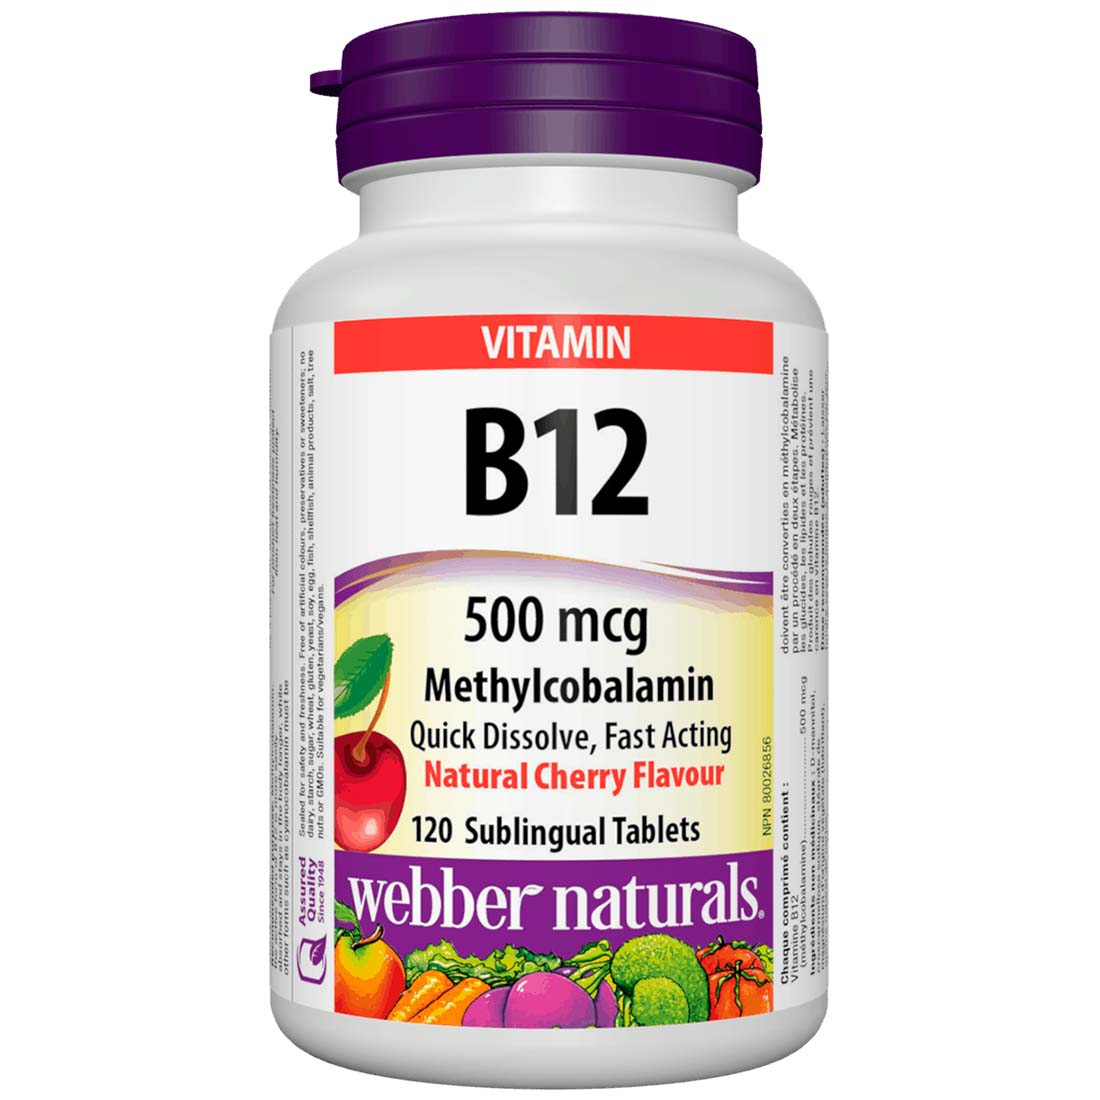 Webber Naturals Vitamin B12, Methylcobalamin, Cherry Flavored, 500mcg, 120 Sublingual Tablets